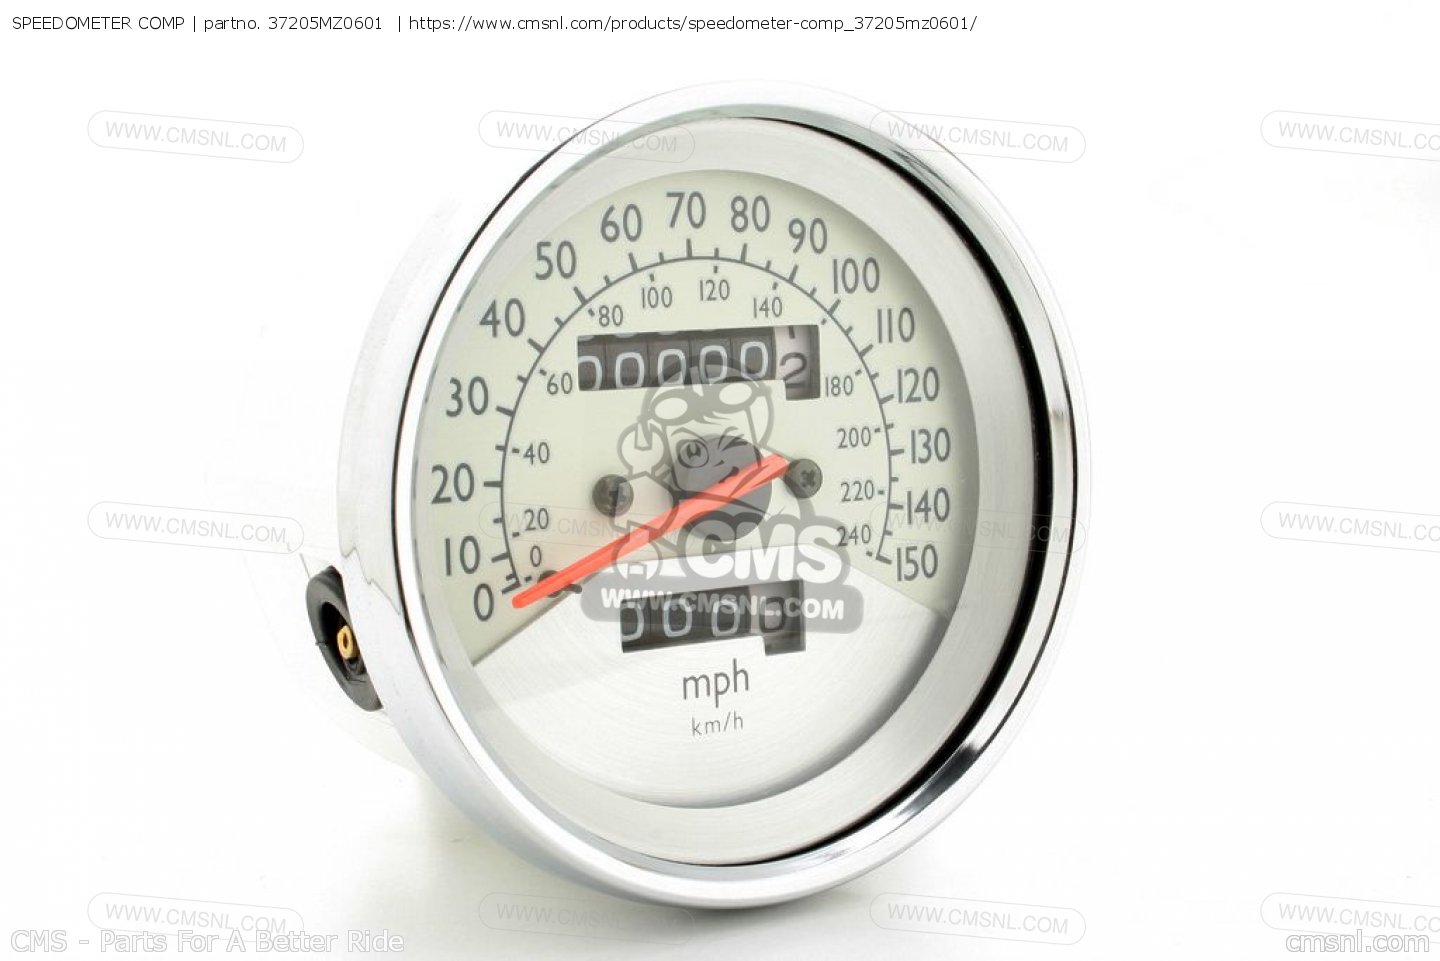 Honda speedometer below peg